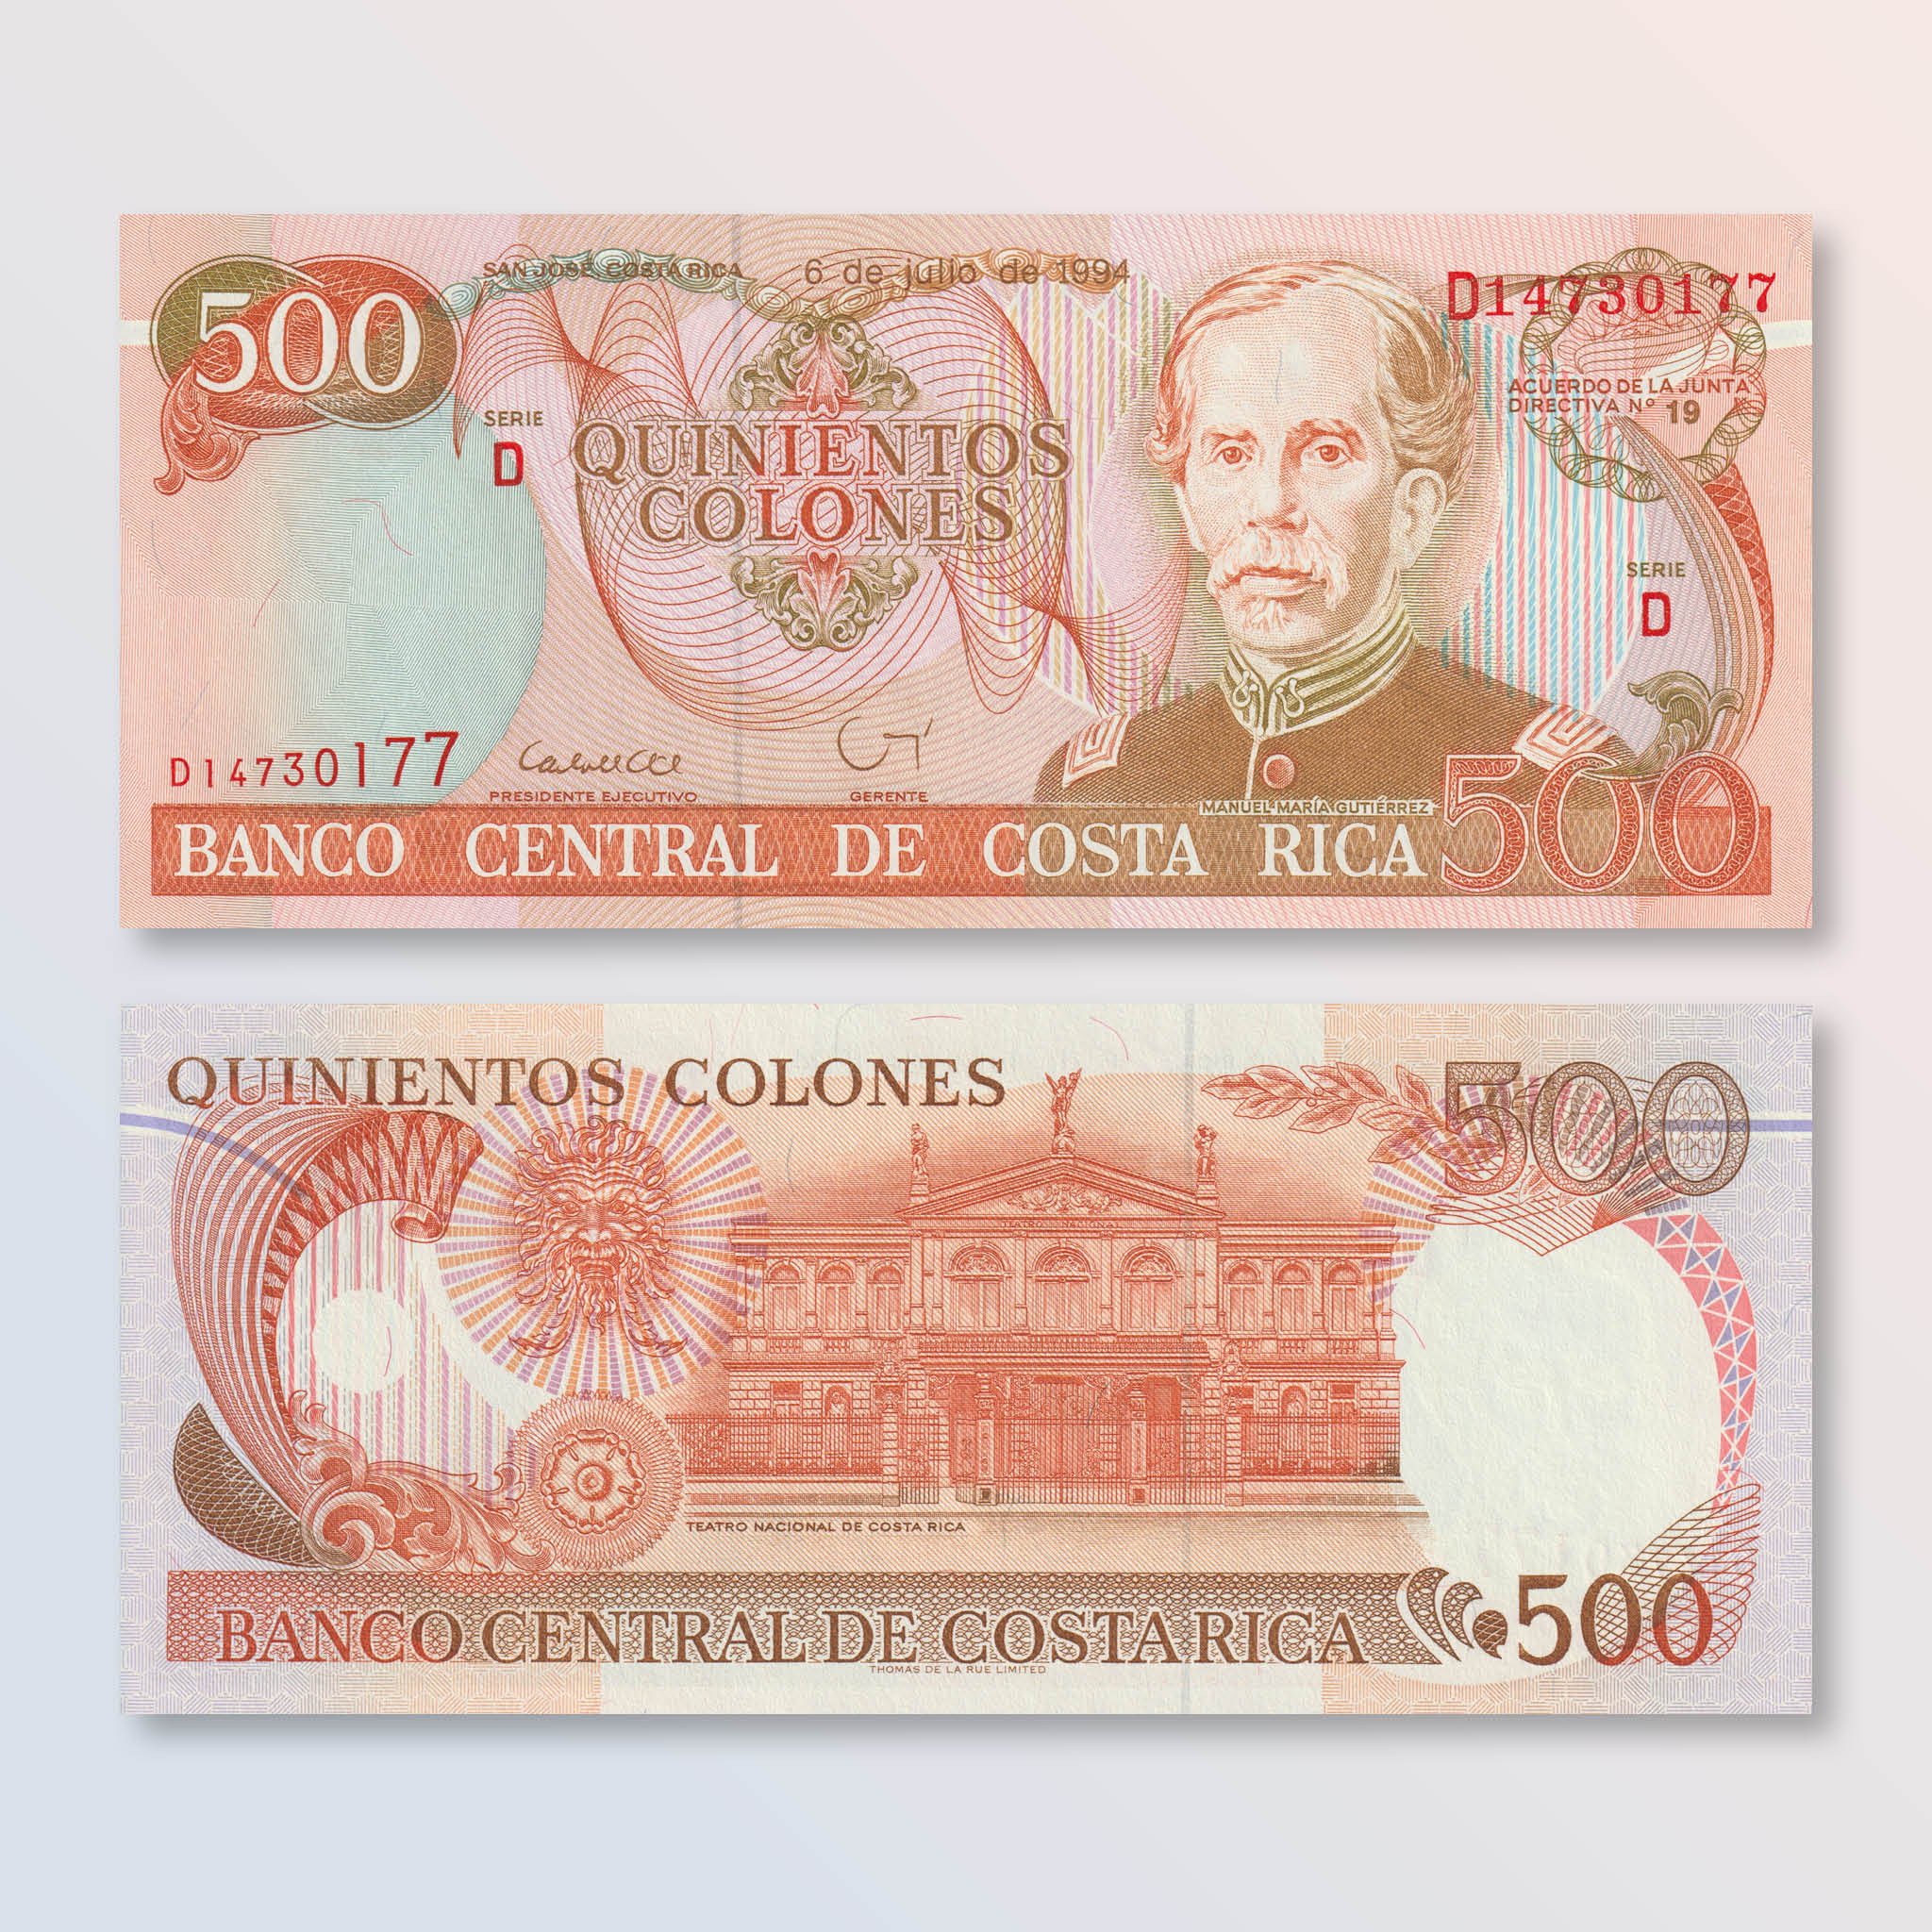 Costa Rica 500 Colones, 1994, B543a, P262a, UNC - Robert's World Money - World Banknotes